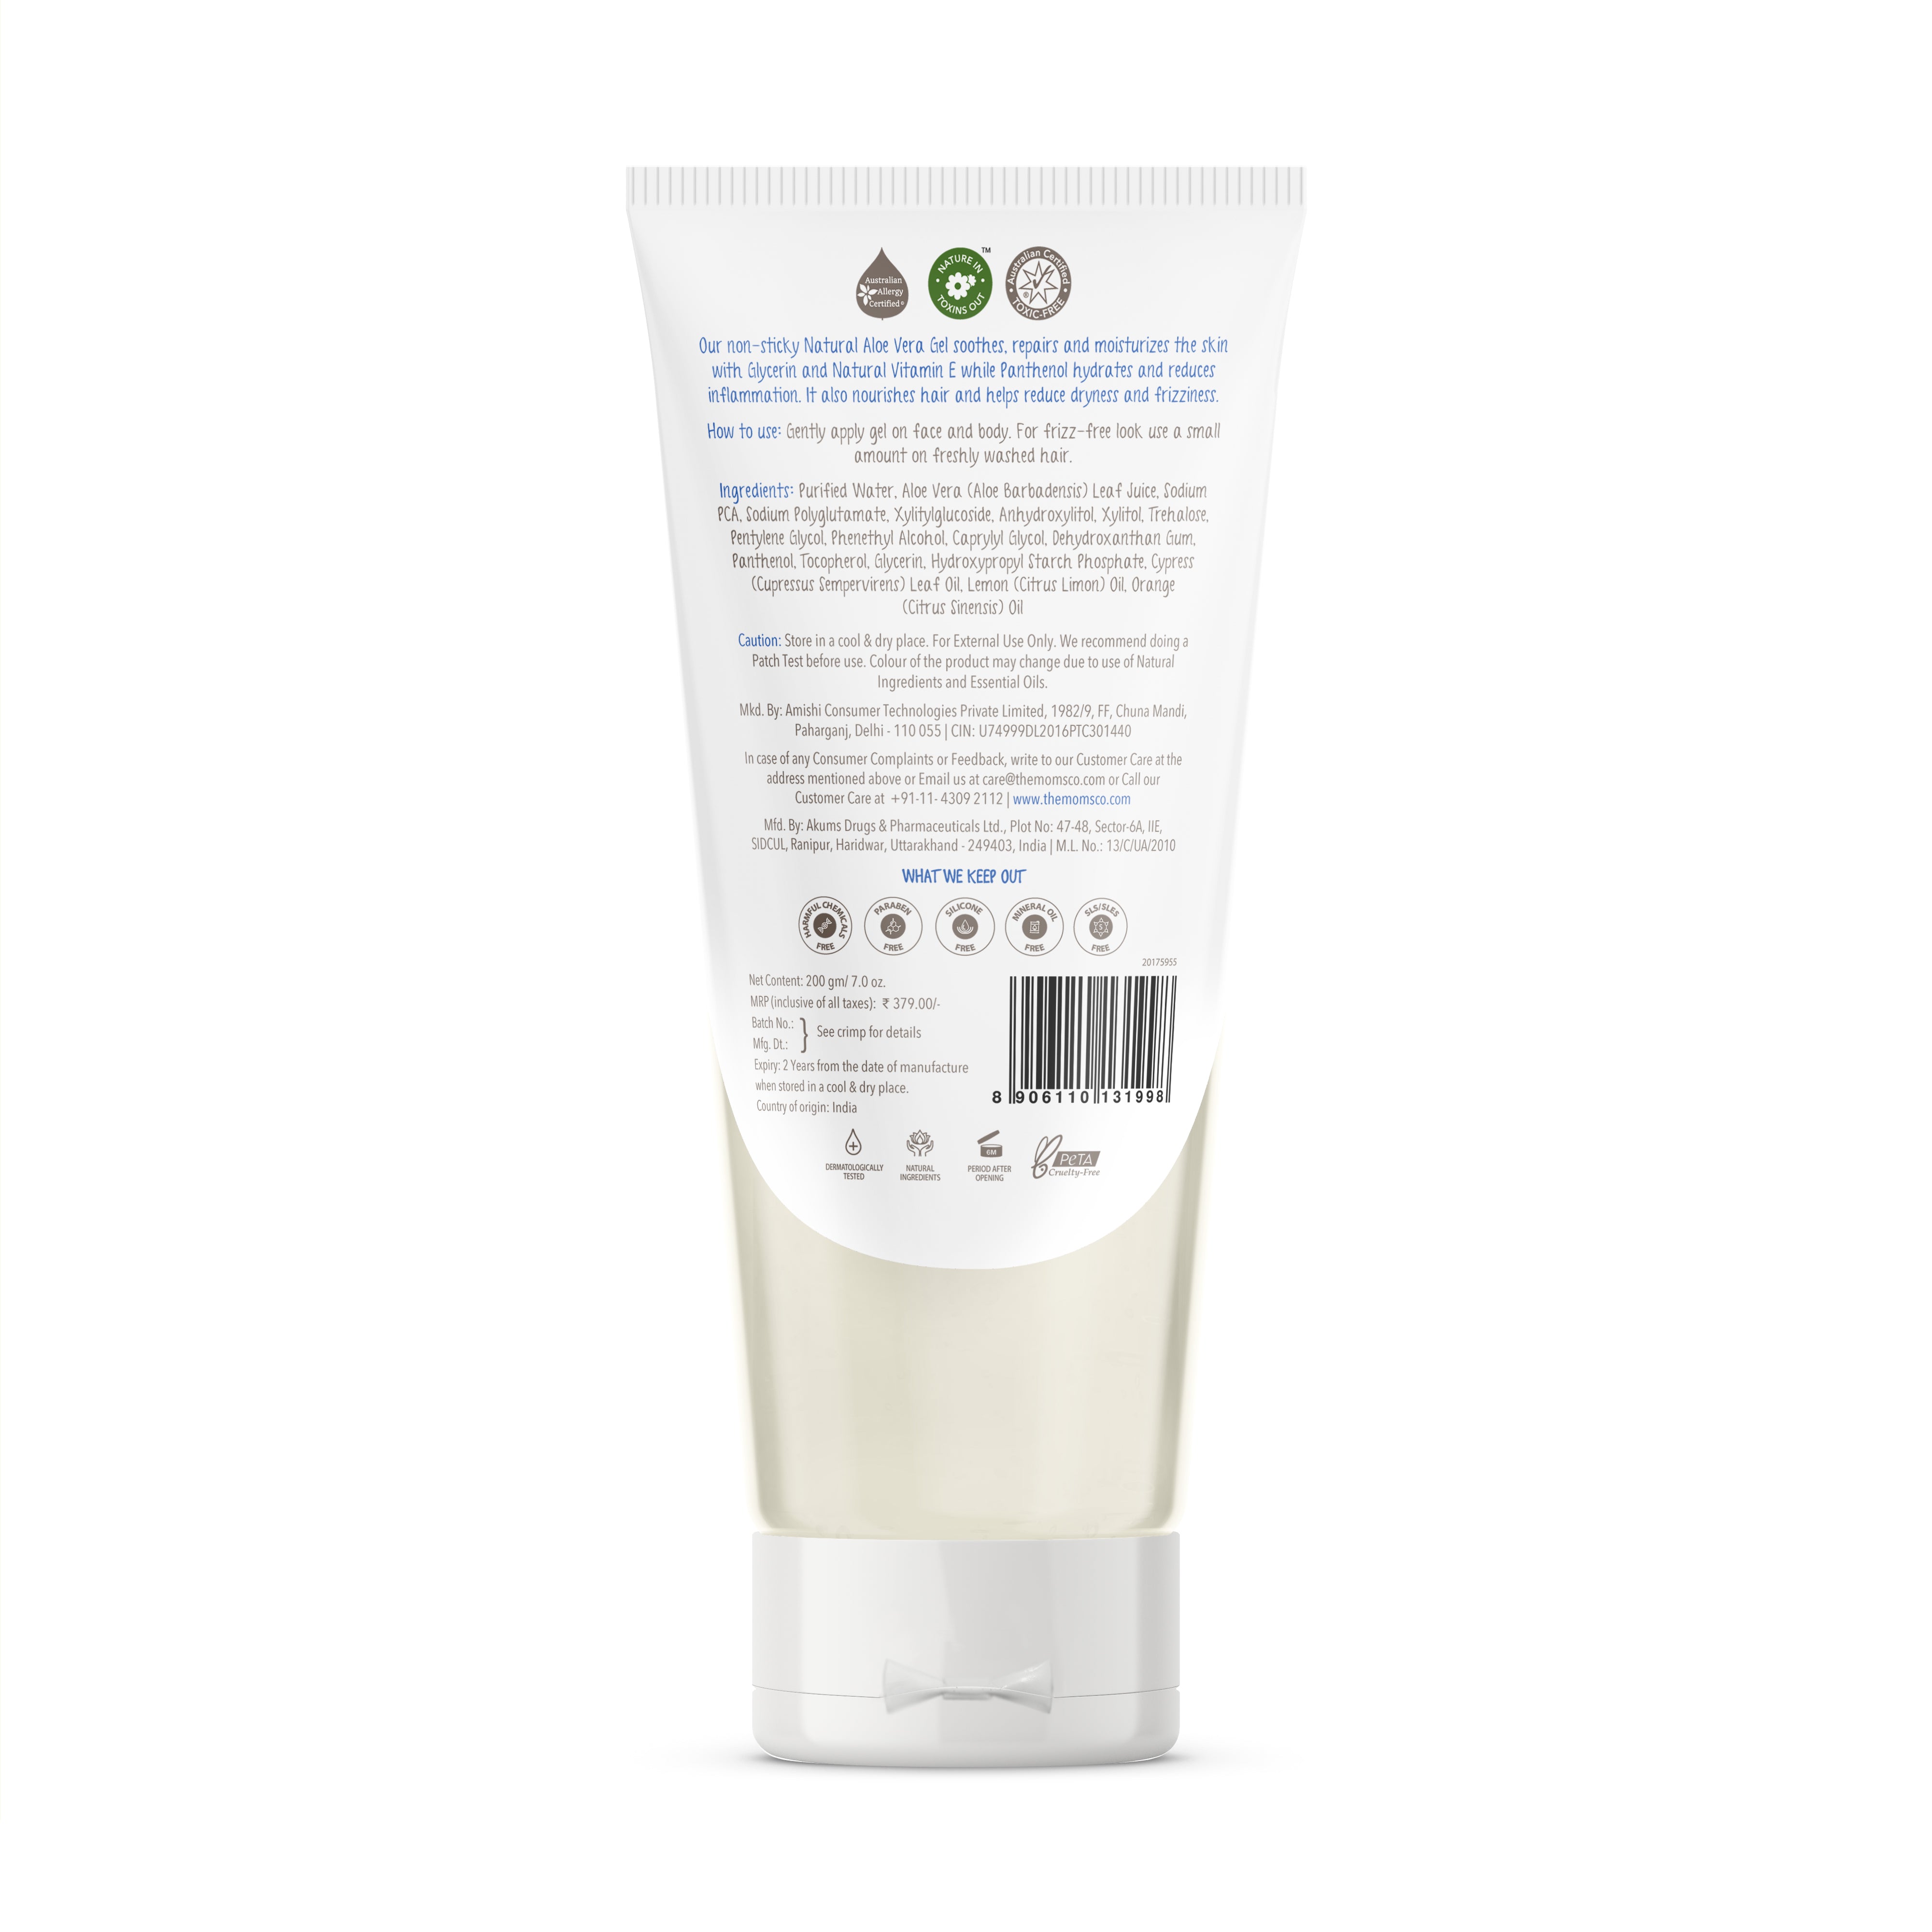 The Moms Co. Multi-Purpose, Natural & Chemical Free Aloe Vera Gel with Vitamin E & Pro Vitamin B5 for Face, Skin, Scalp & Hair-200 Gm